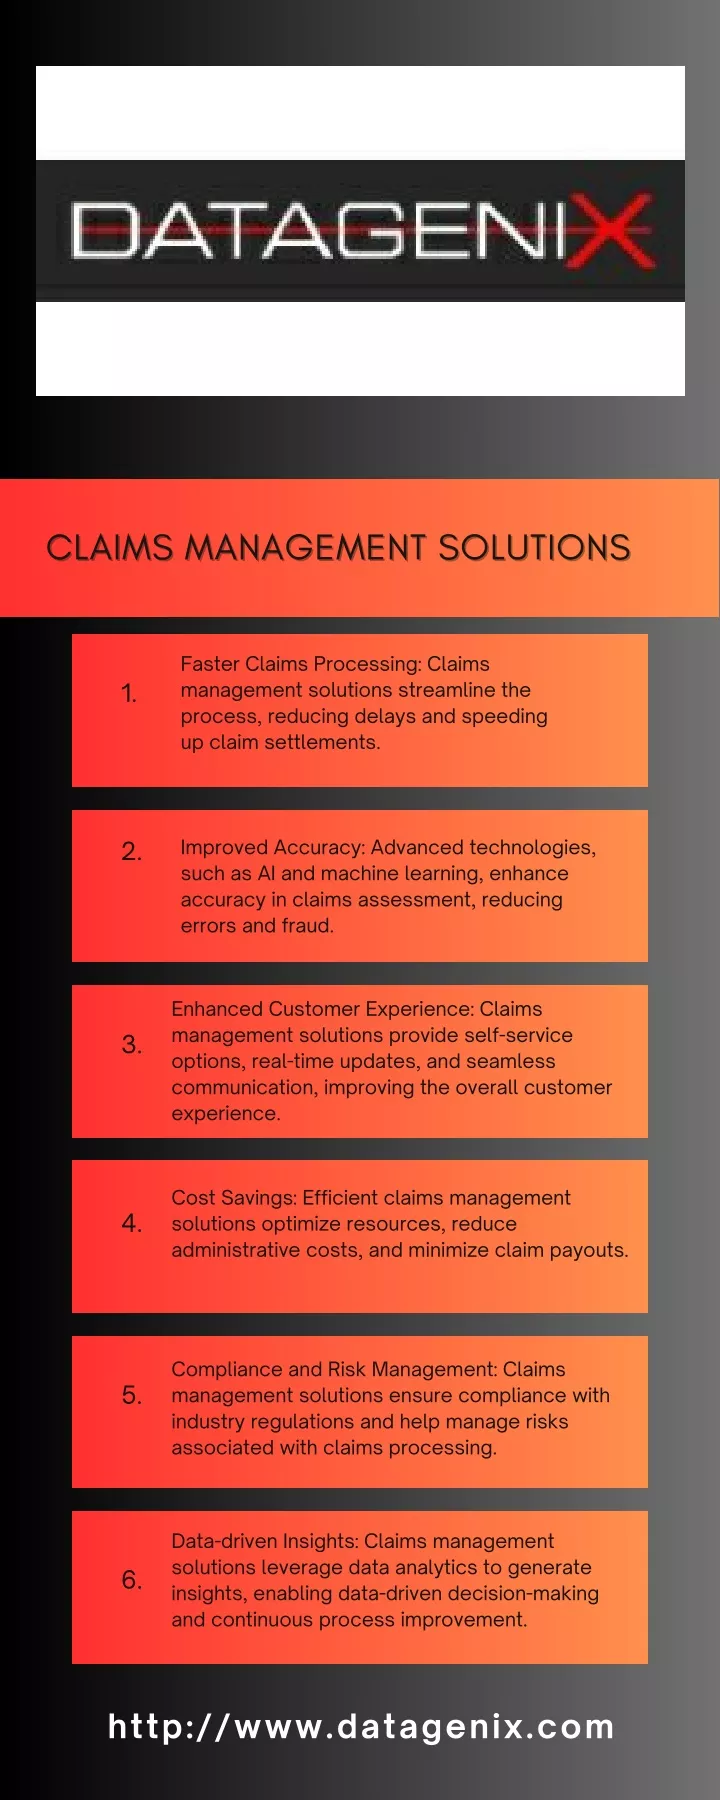 claims management solutions claims management